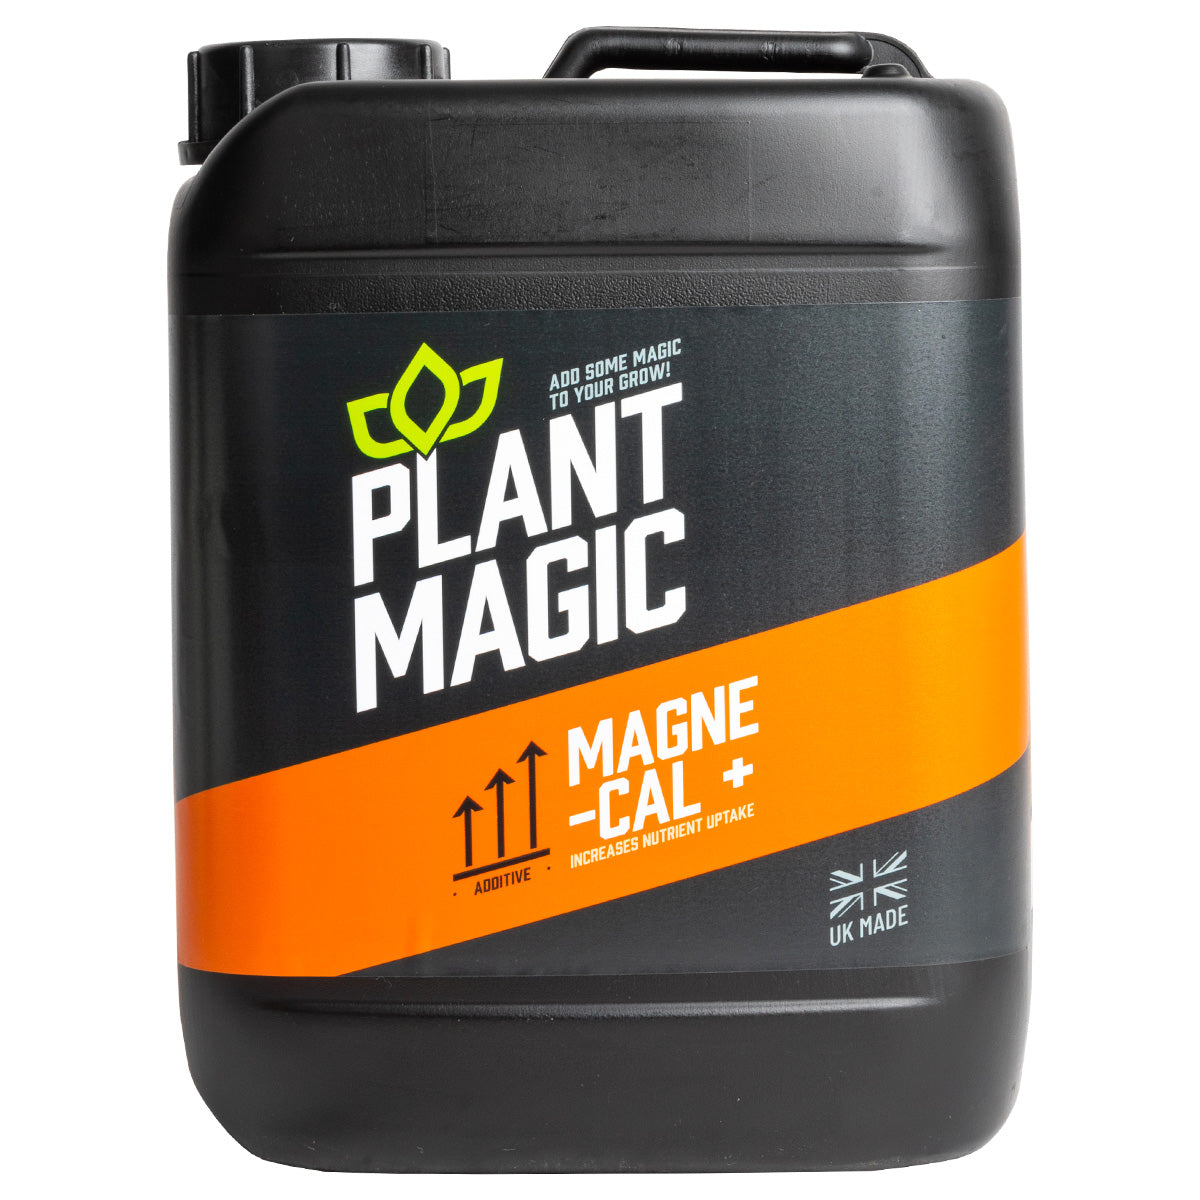 Plant Magic - Magne-Cal+